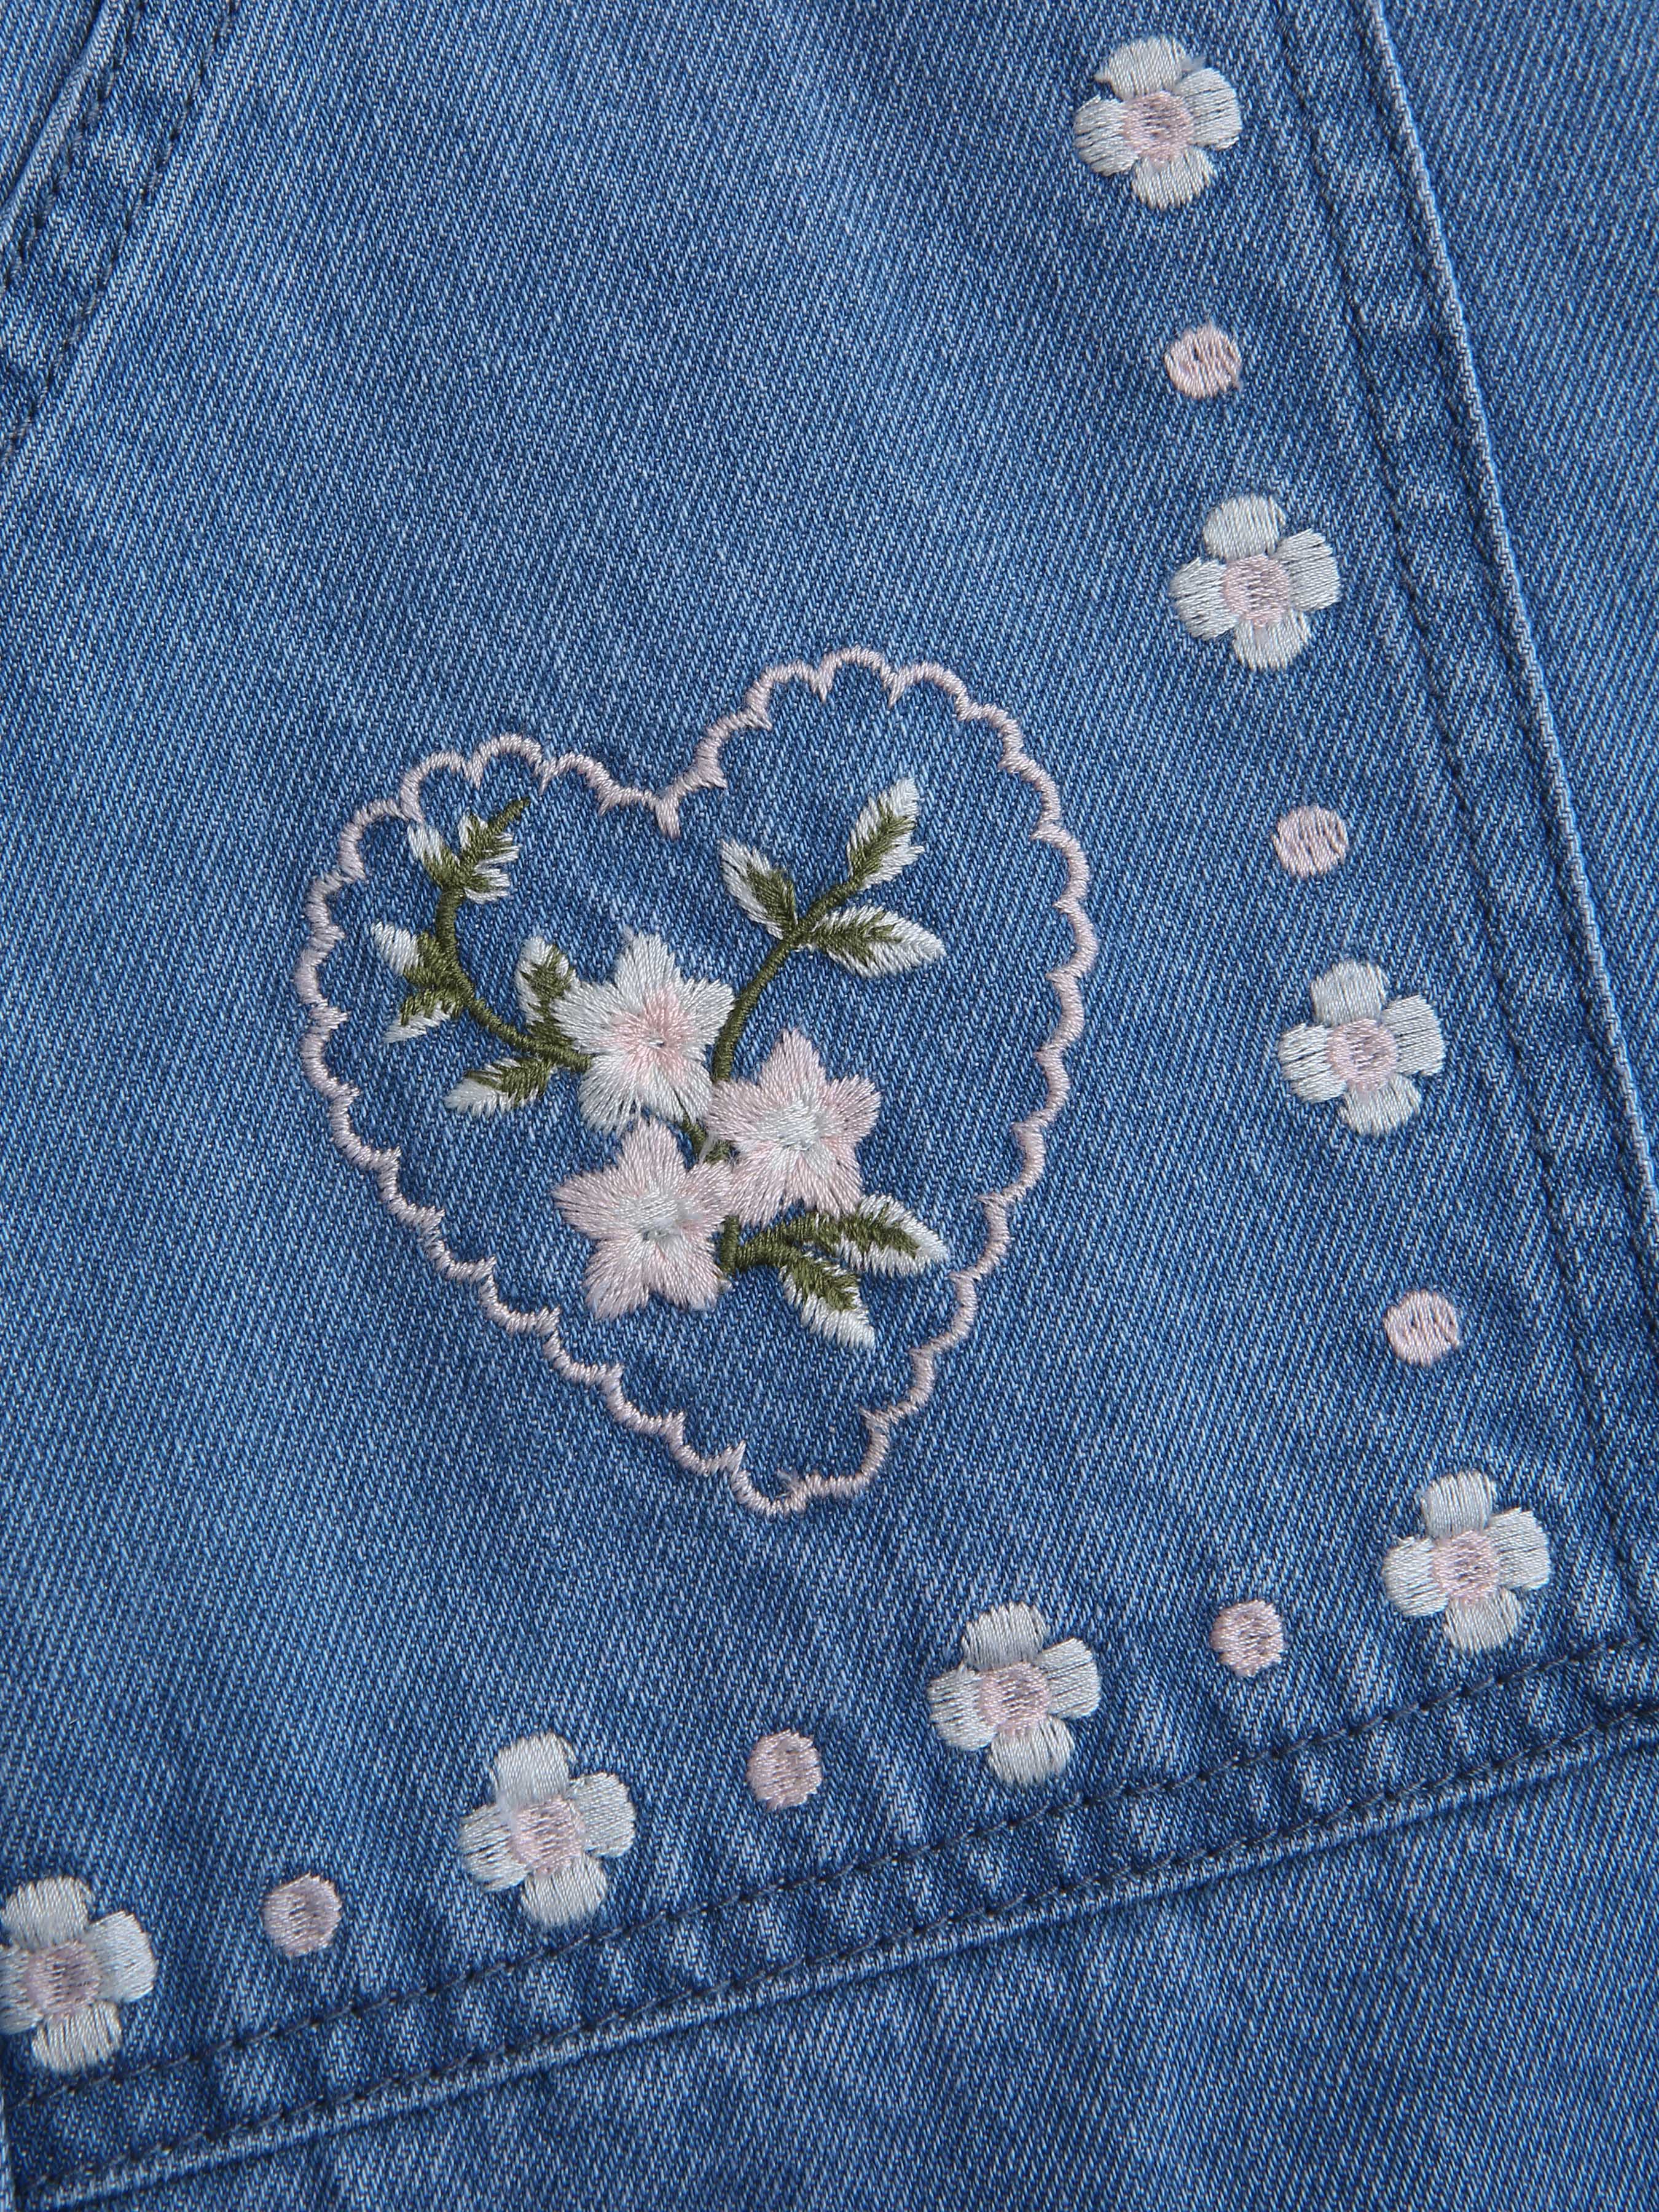 Heart & Floral Embroidery Denim Shorts - Cider